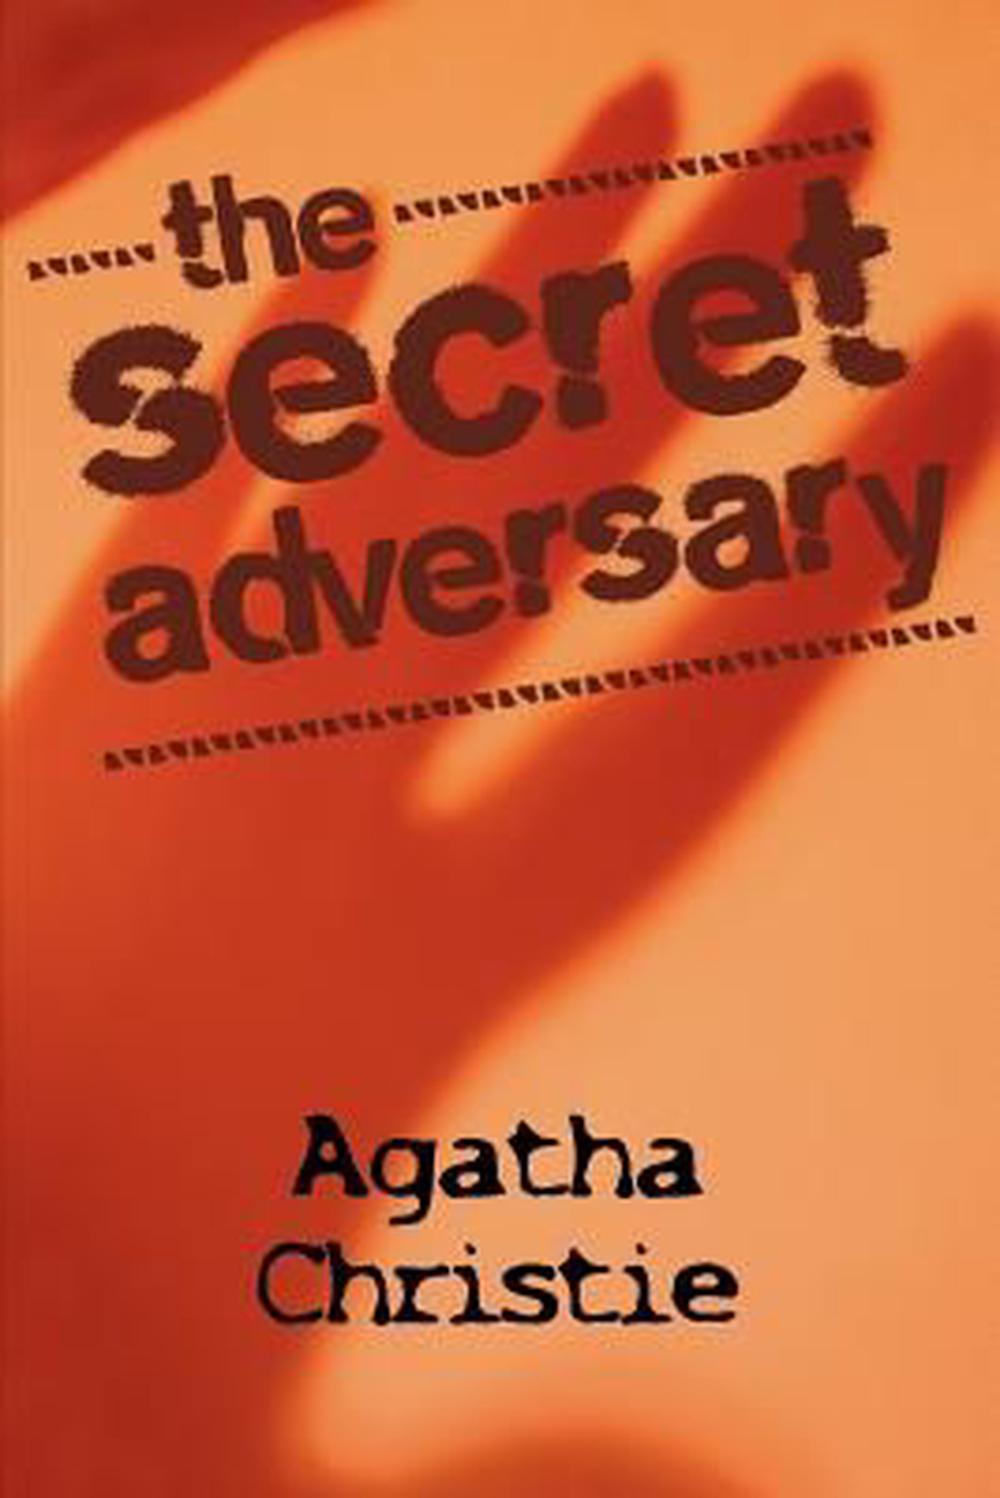 the secret adversary book summary